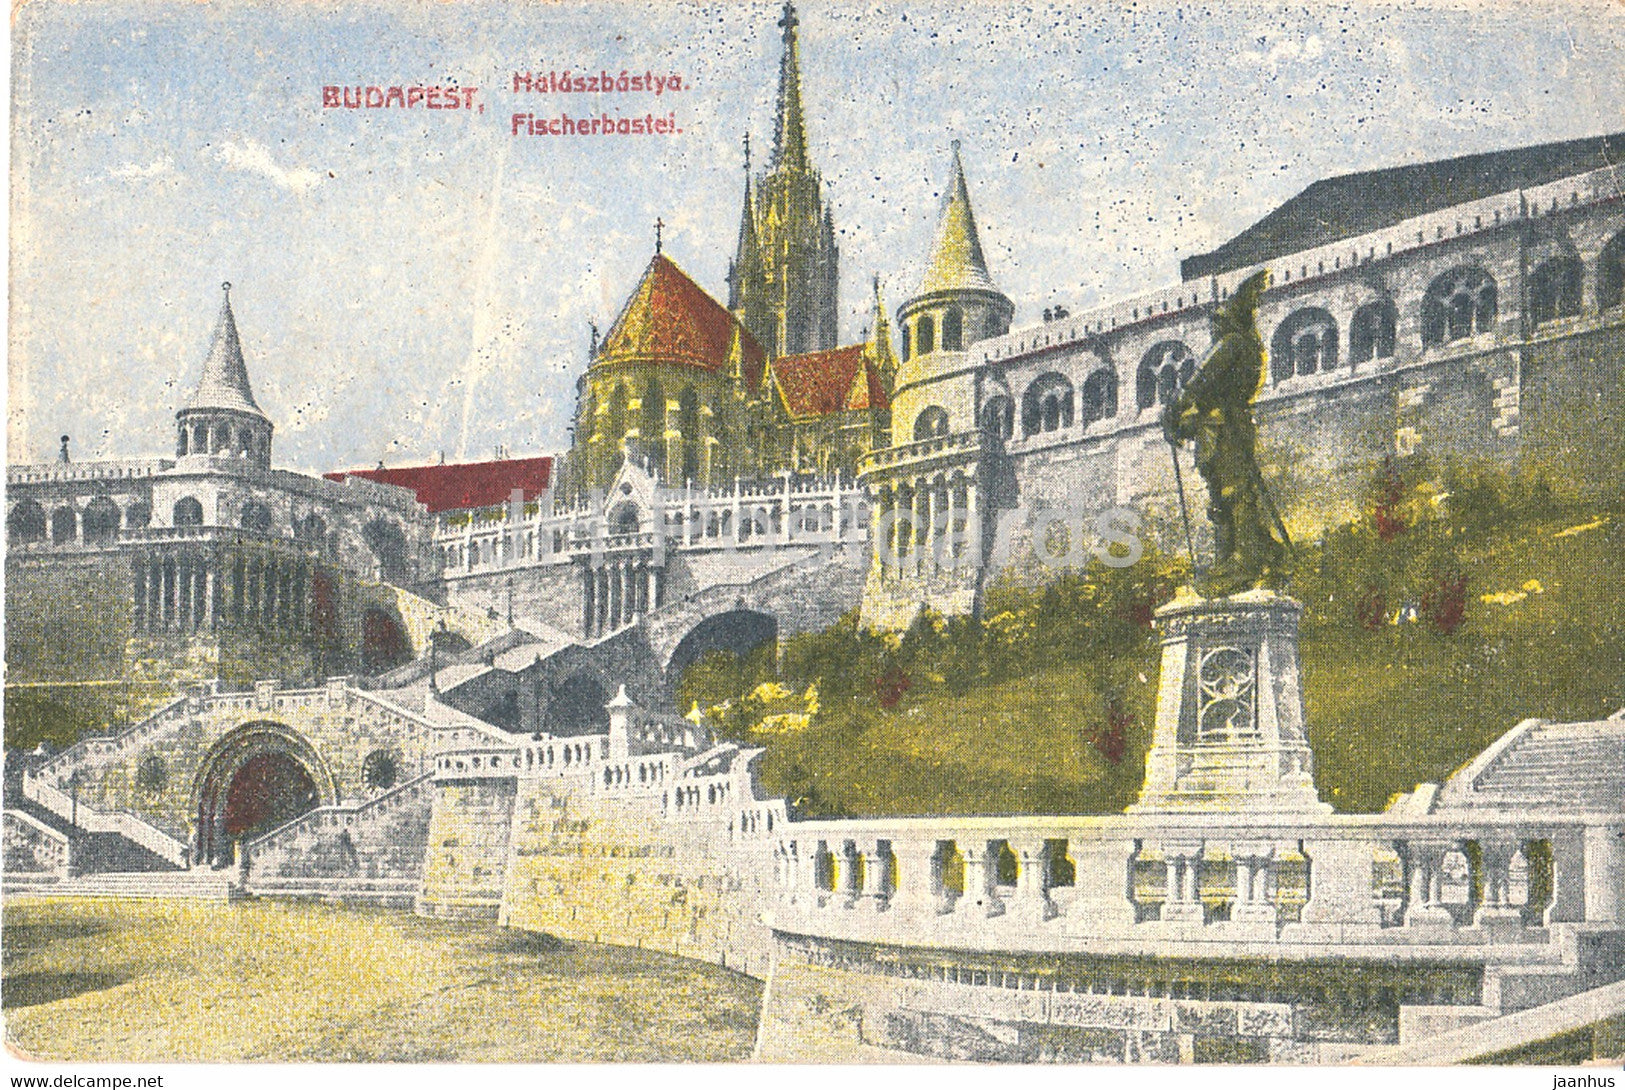 Budapest - Halaszbastya - Fischerbastei - old postcard - Hungary - unused - JH Postcards